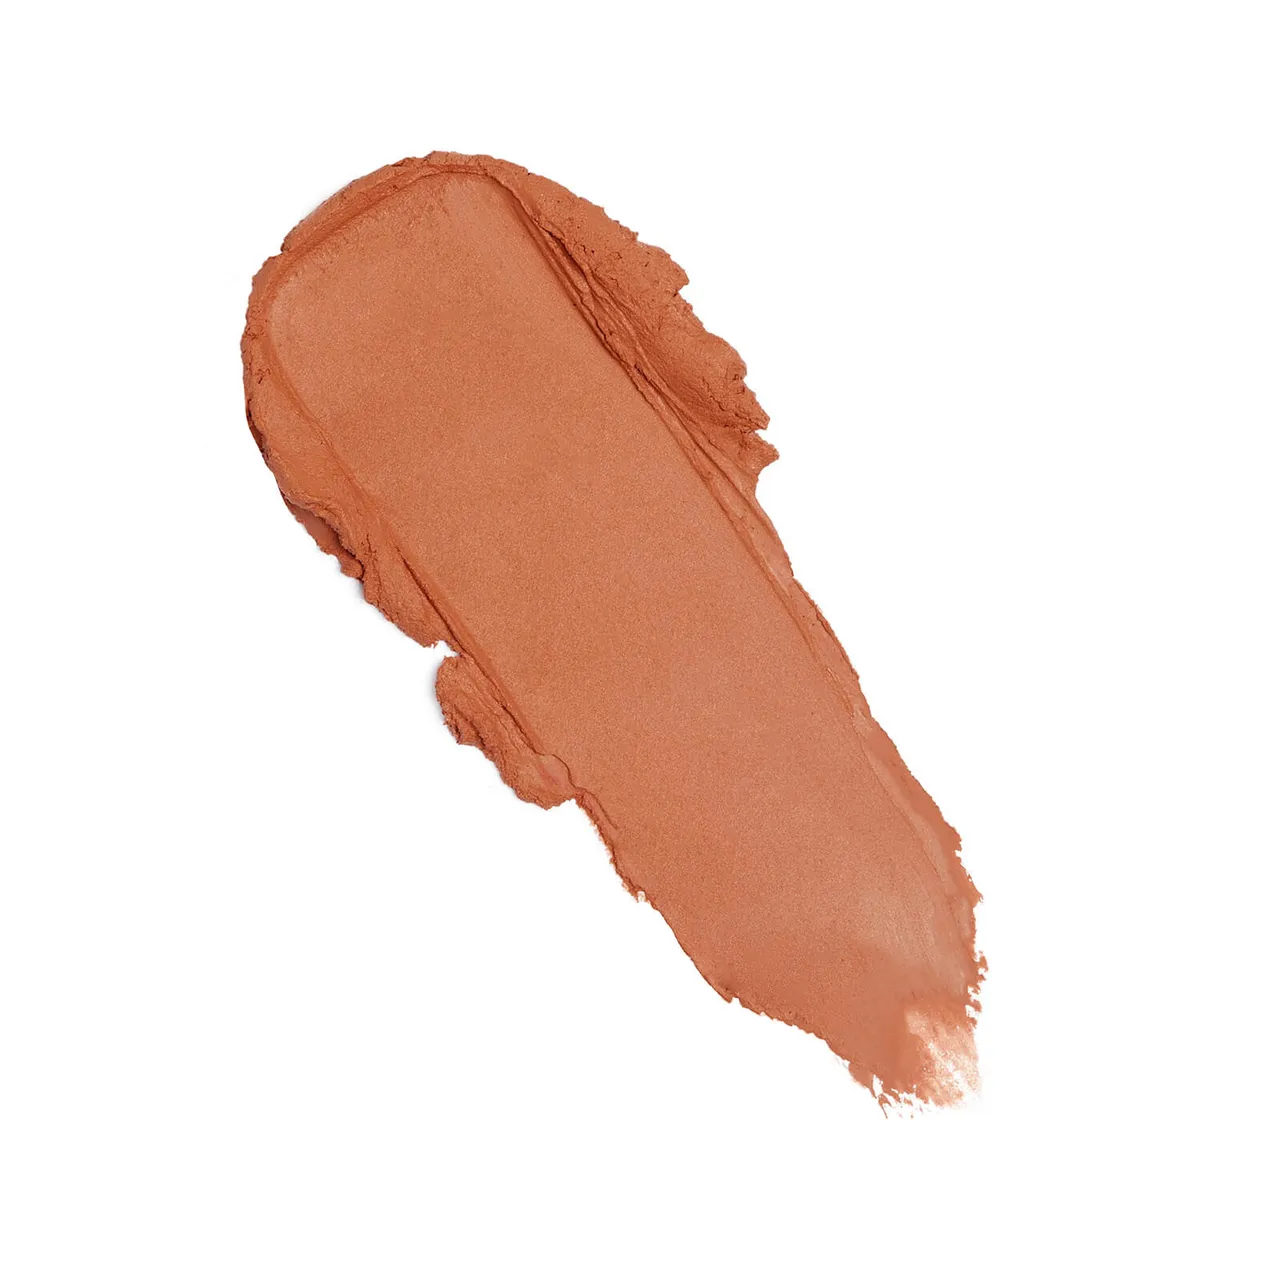 Makeup Revolution Lip Allure Soft Satin Lipstick 50g (Various Shades) - Lover Nude